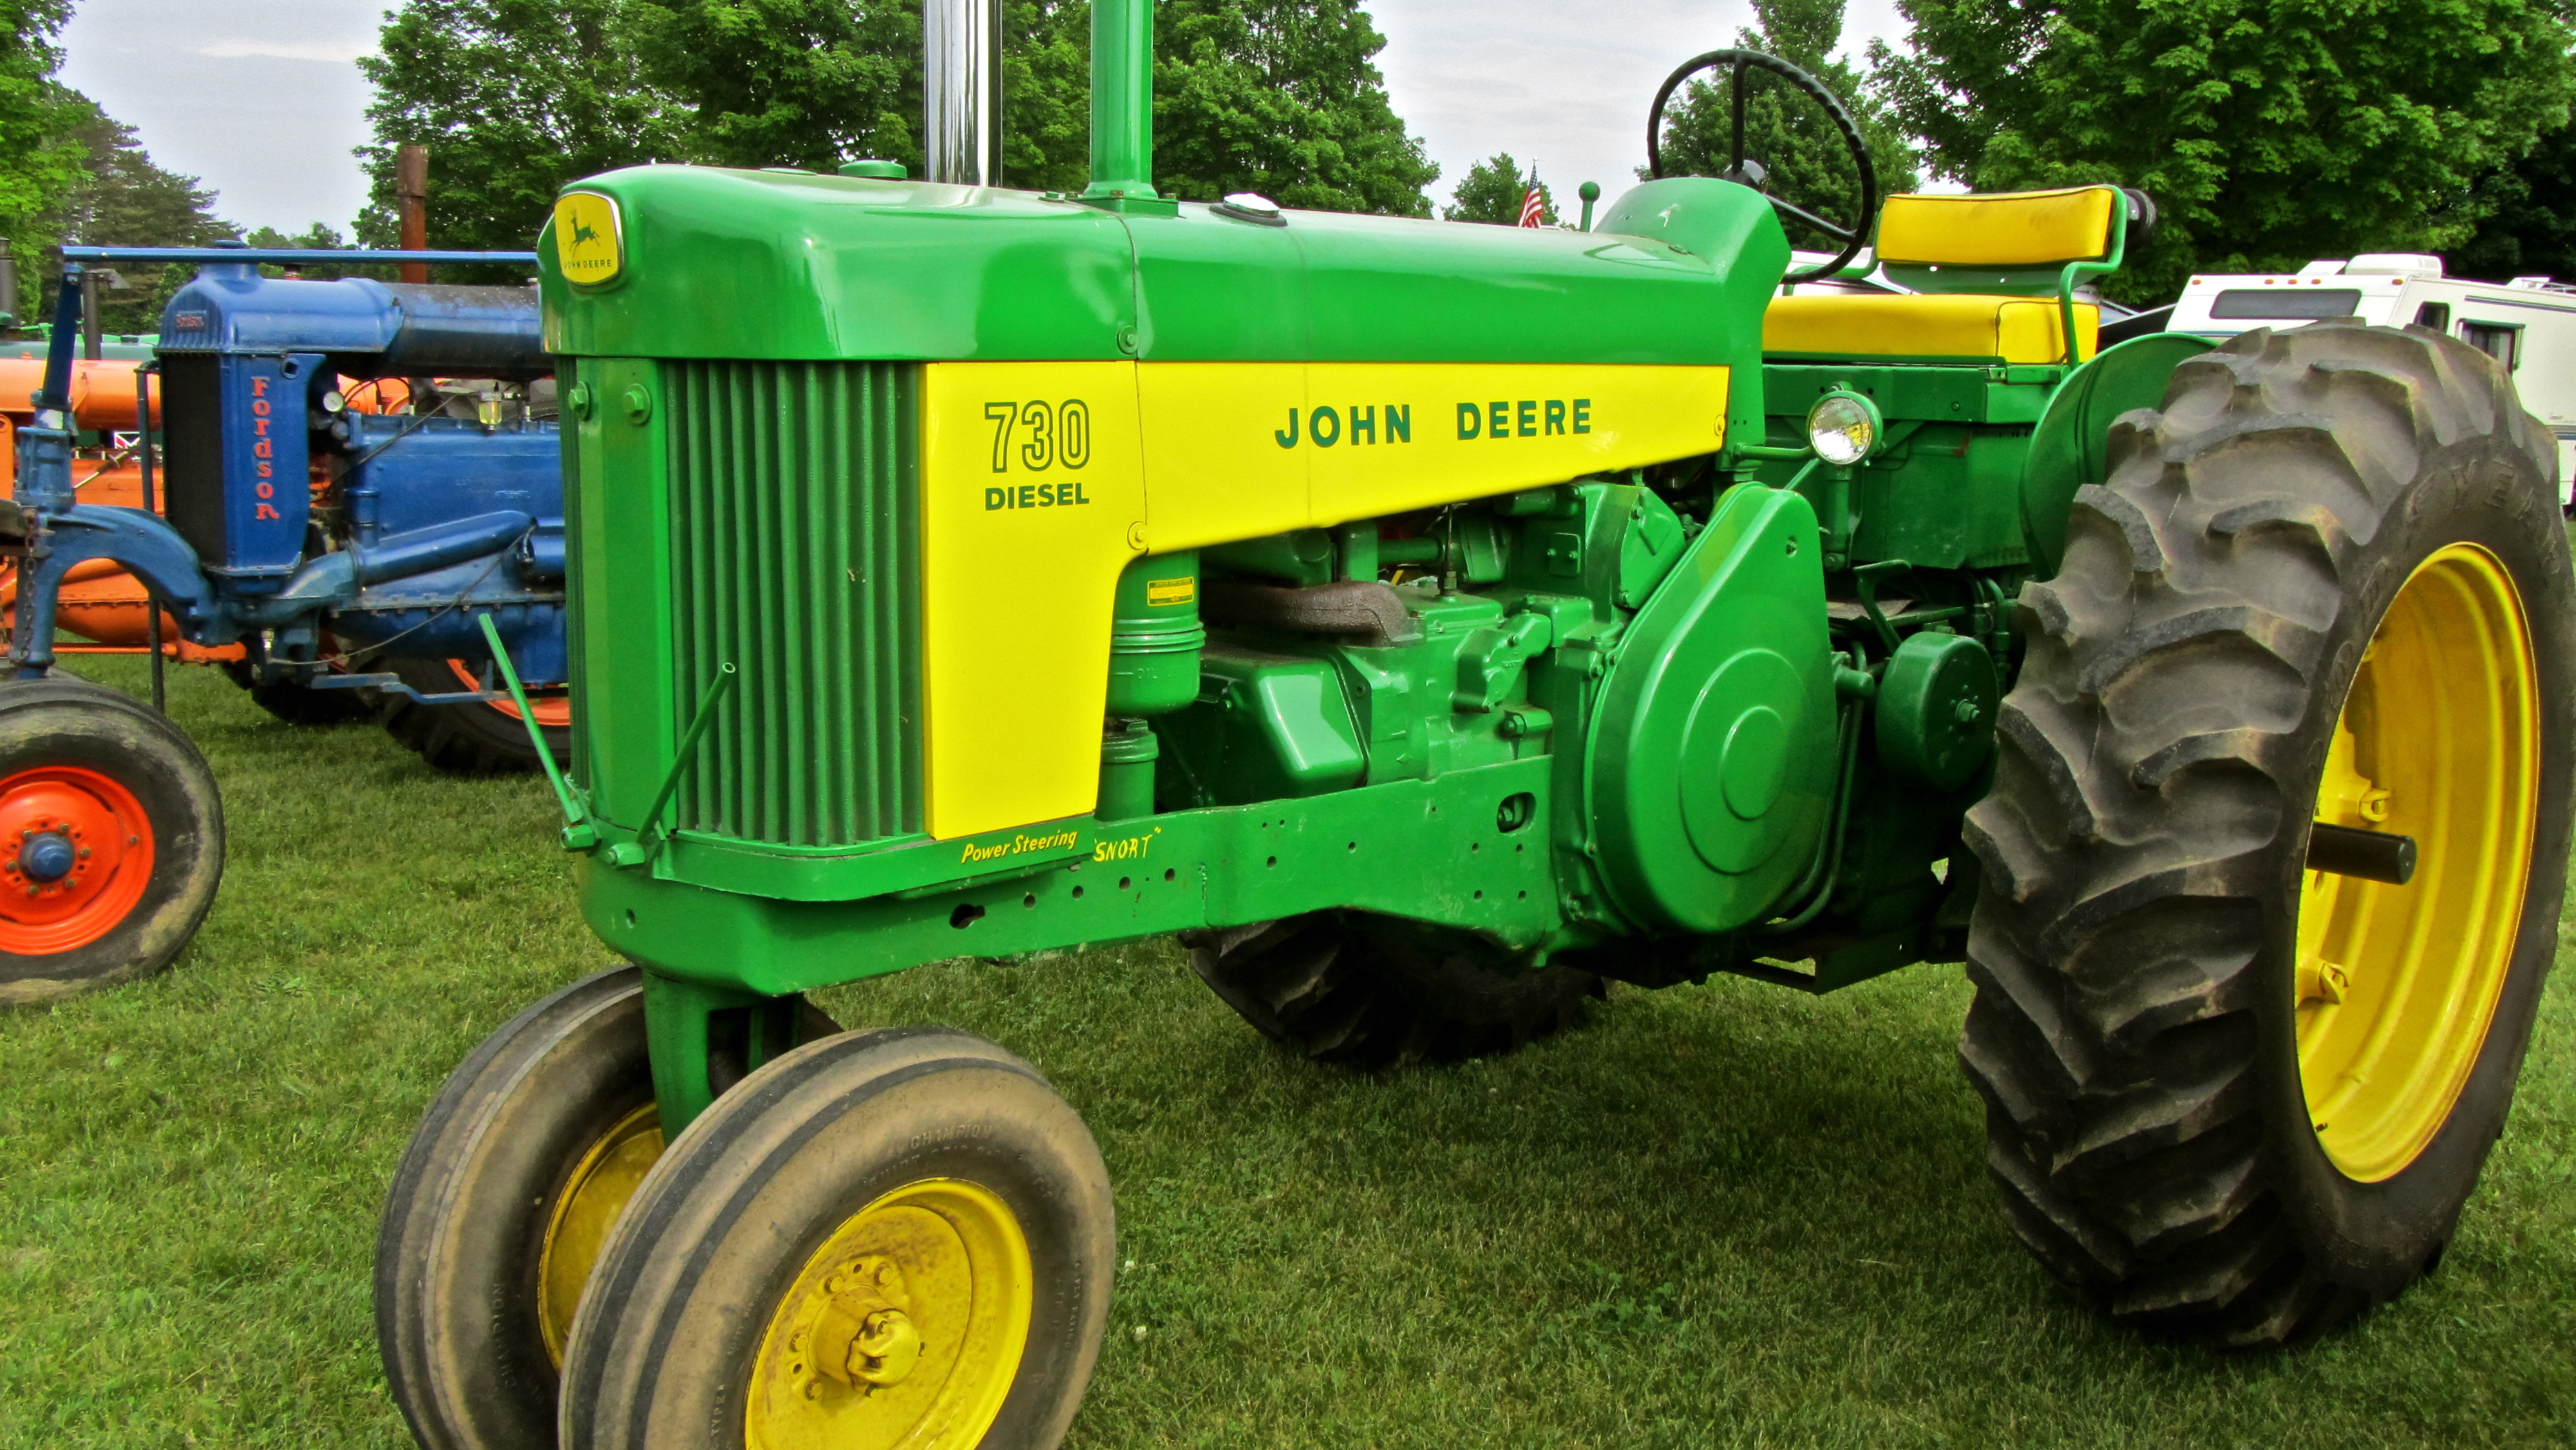 File:John Deere 730 Diesel Tractor.jpg - Wikimedia Commons